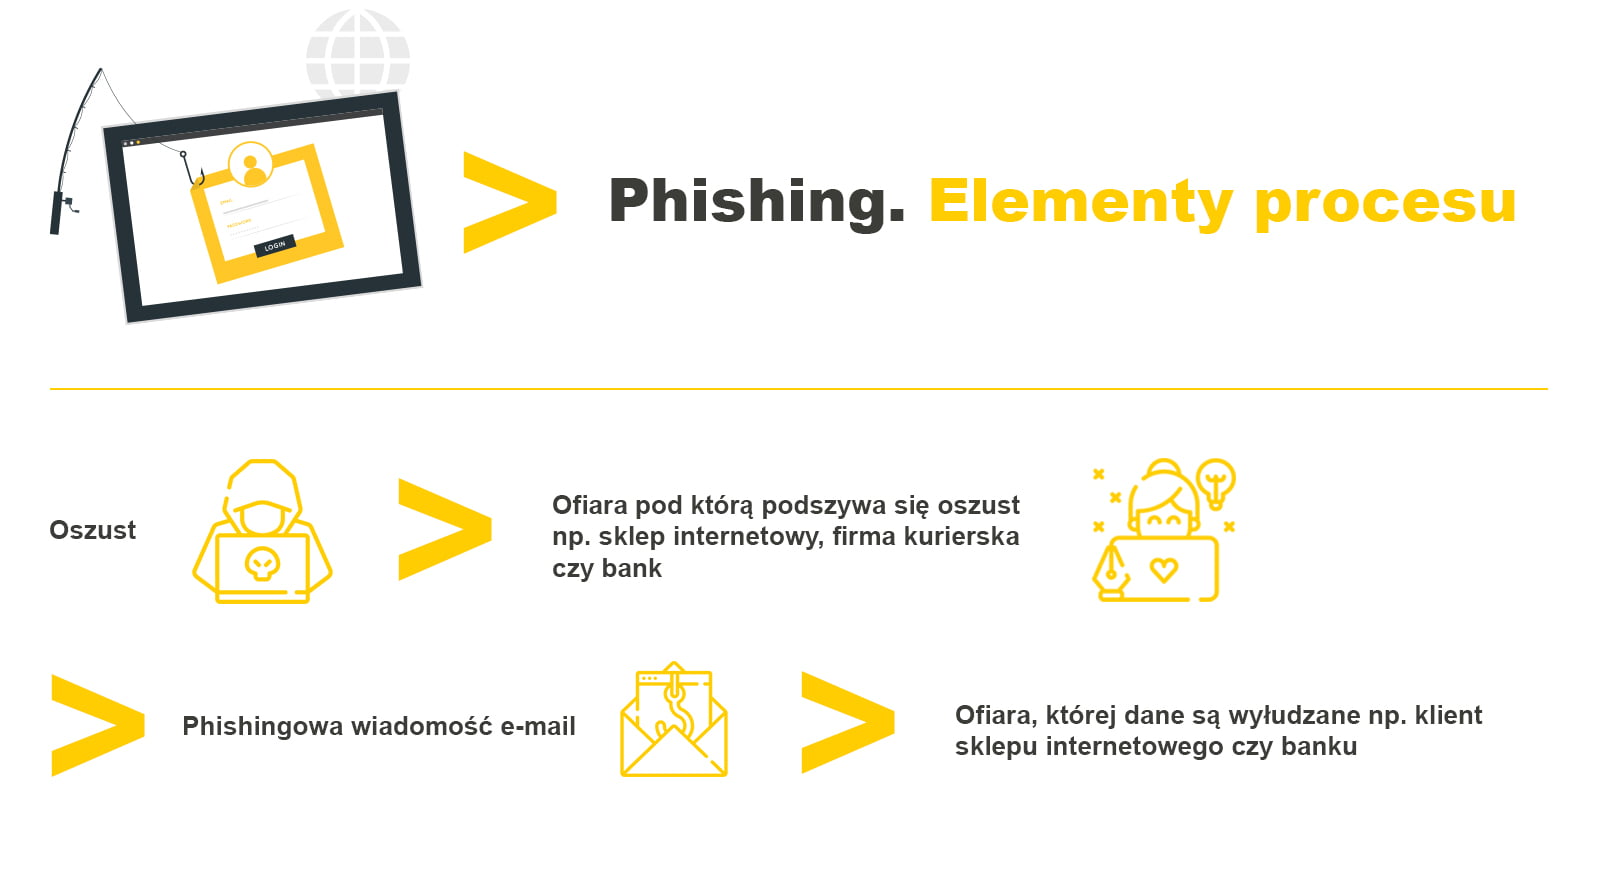 Phishing. Elementy procesu